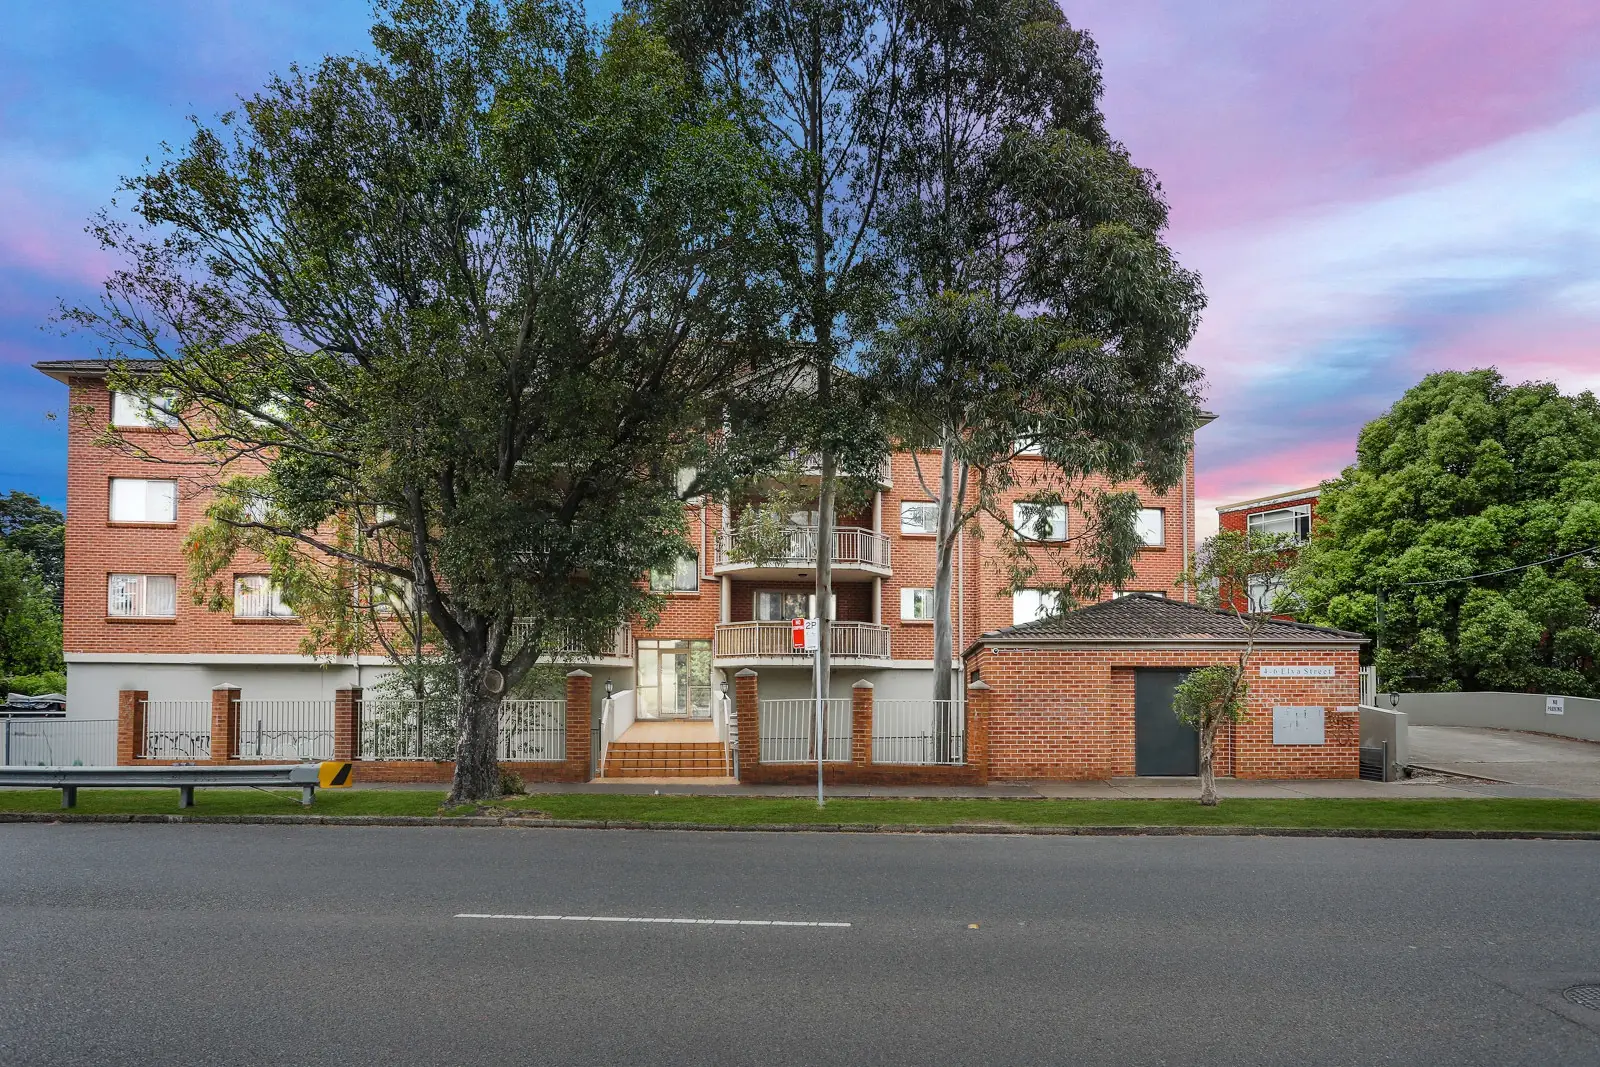 5/4-6 Elva Street, Strathfield Sold by Richard Matthews Real Estate - image 8